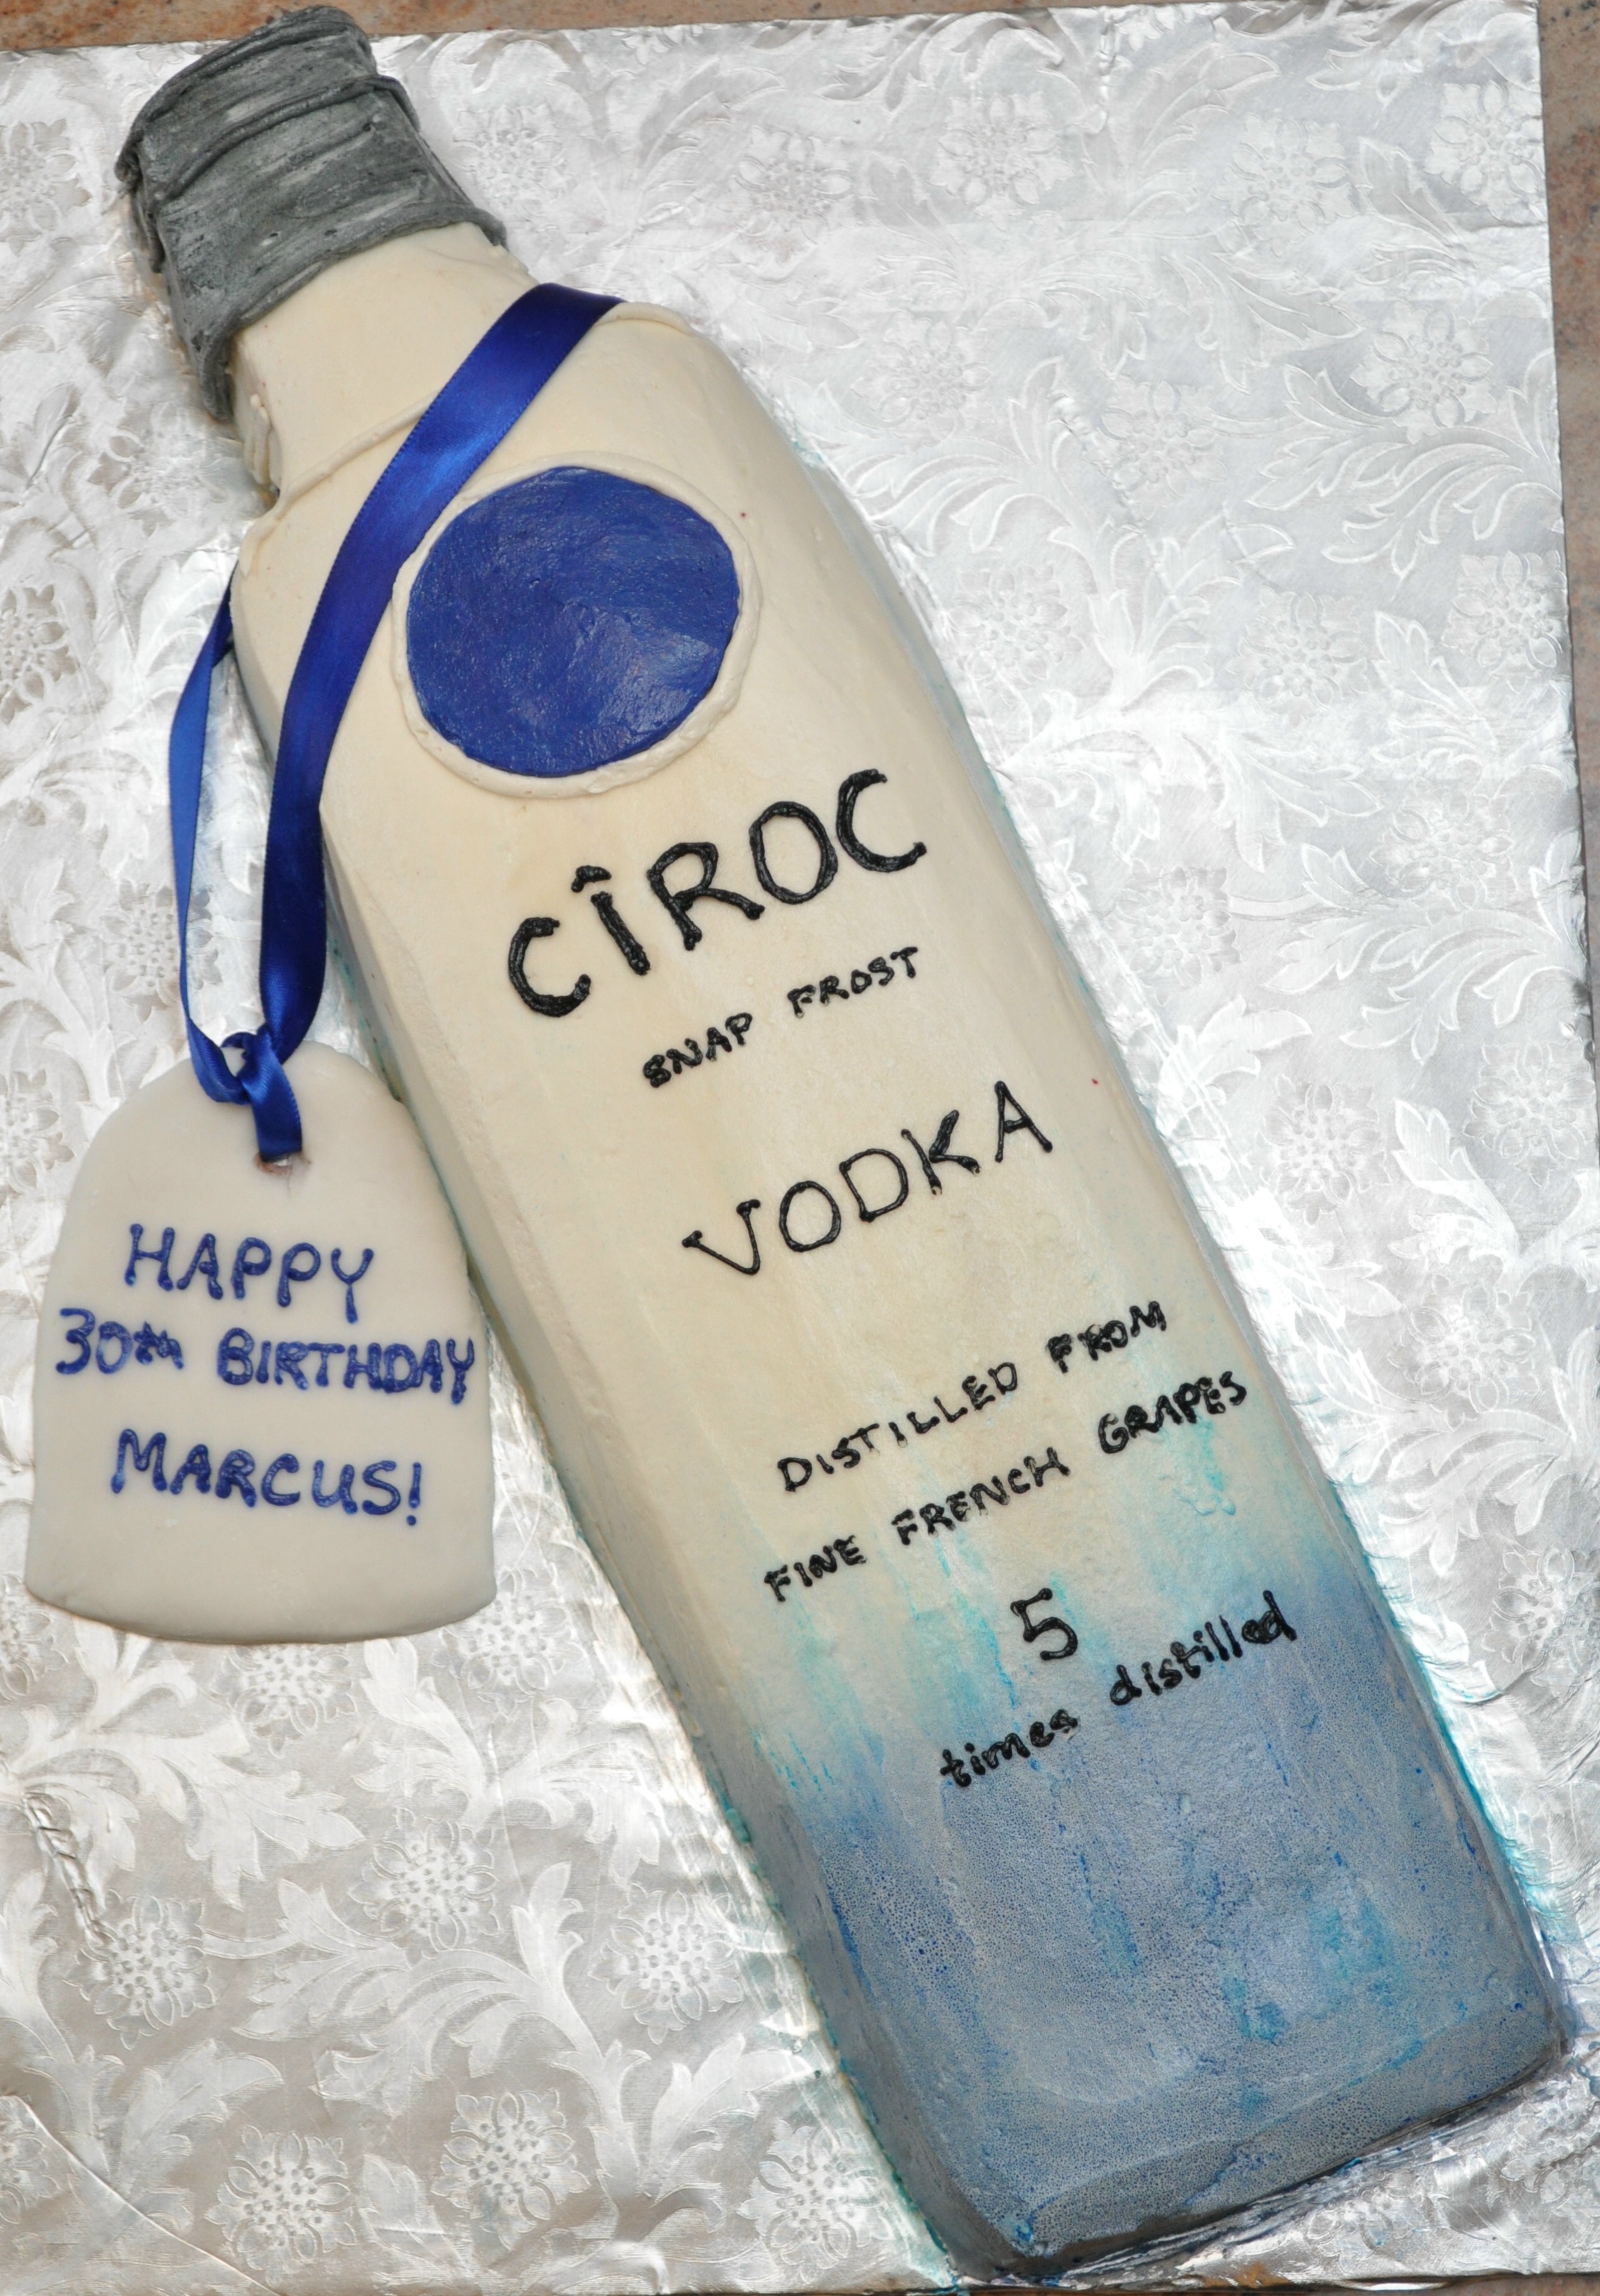 Ciroc Bottle Birthday Cake